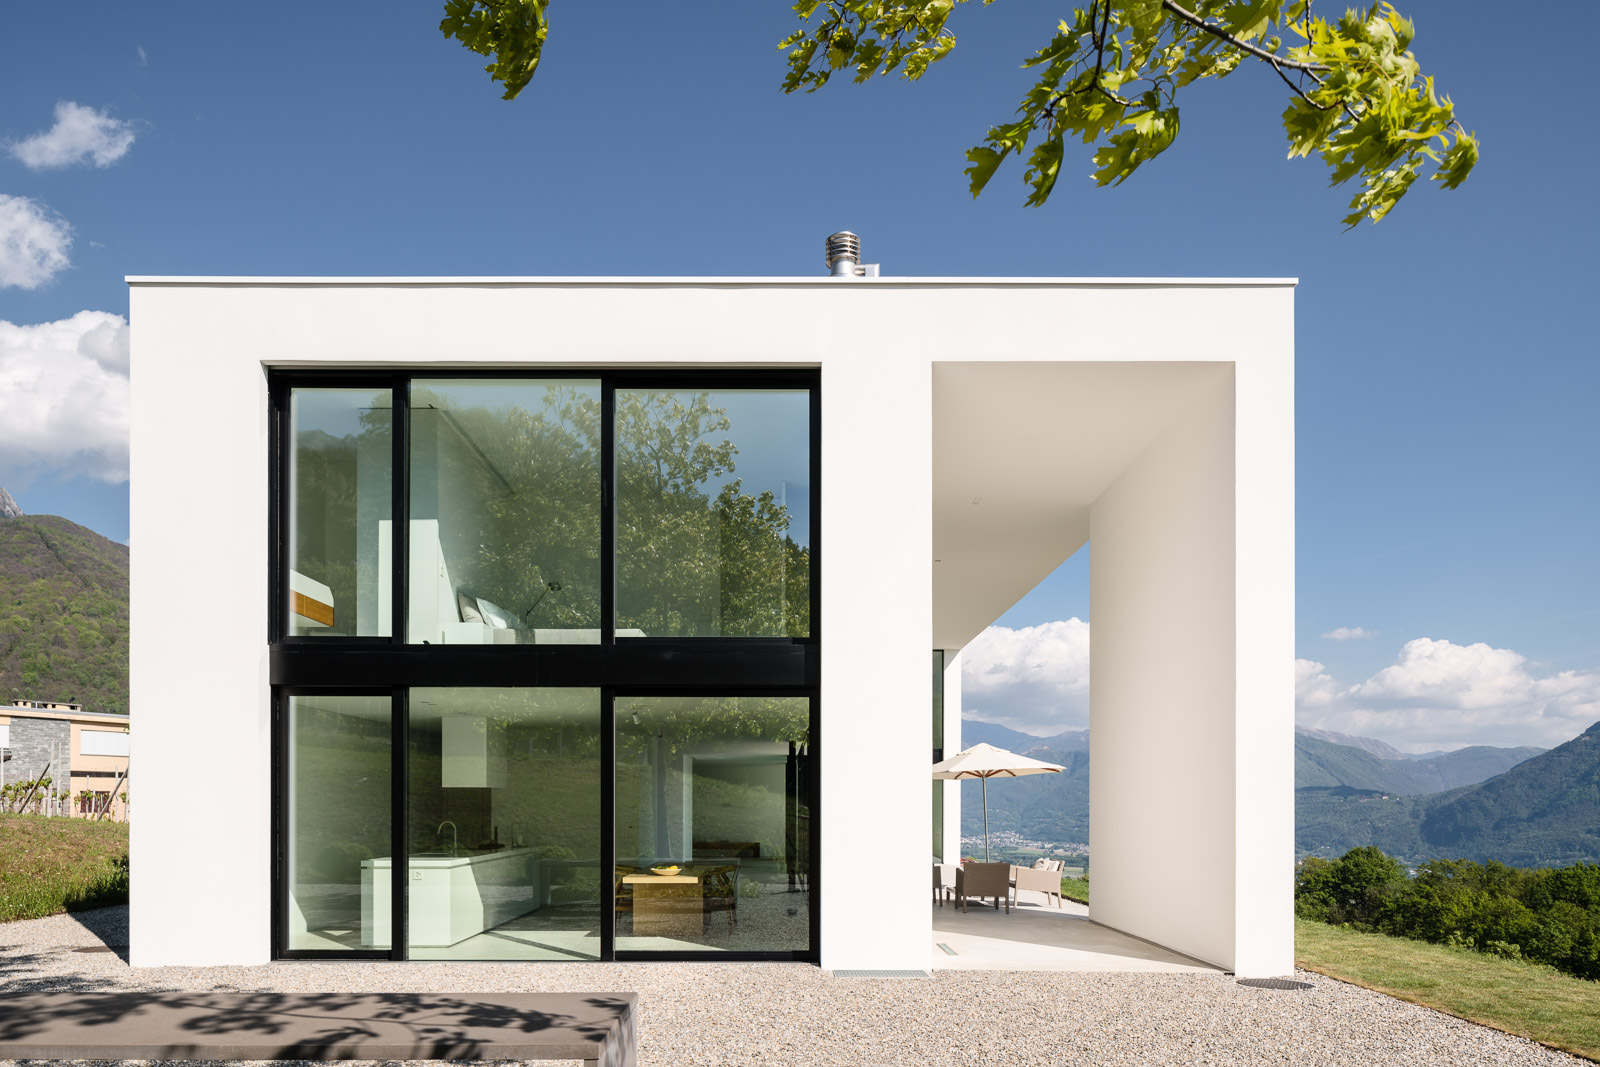 Luxury holiday villa, Ticino, Switzerland, Architecture and Interior Photography